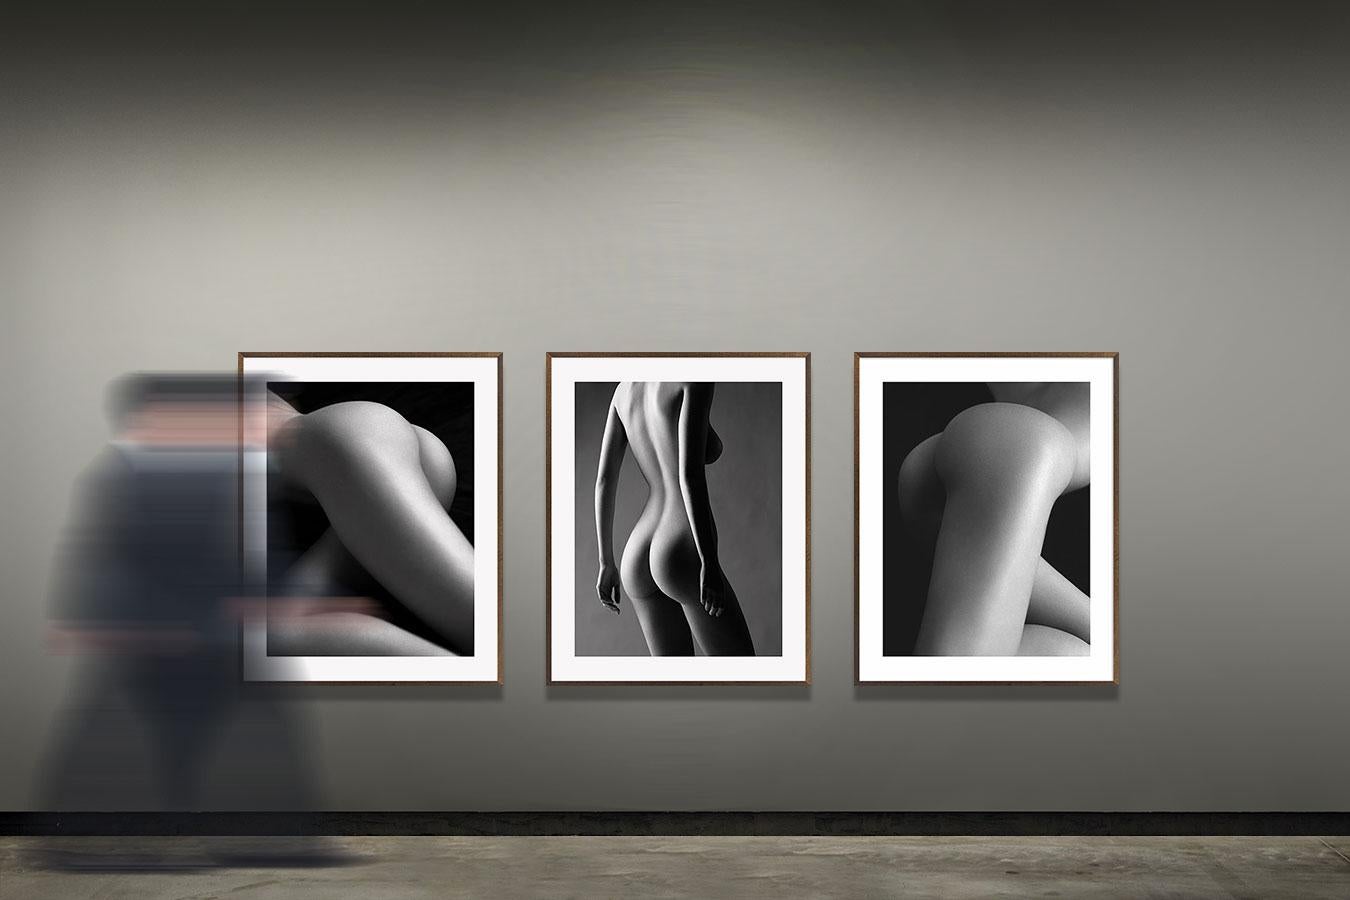 Ausstellungsraum, Youma, Mailand (Grau), Black and White Photograph, von Bruno Bisang